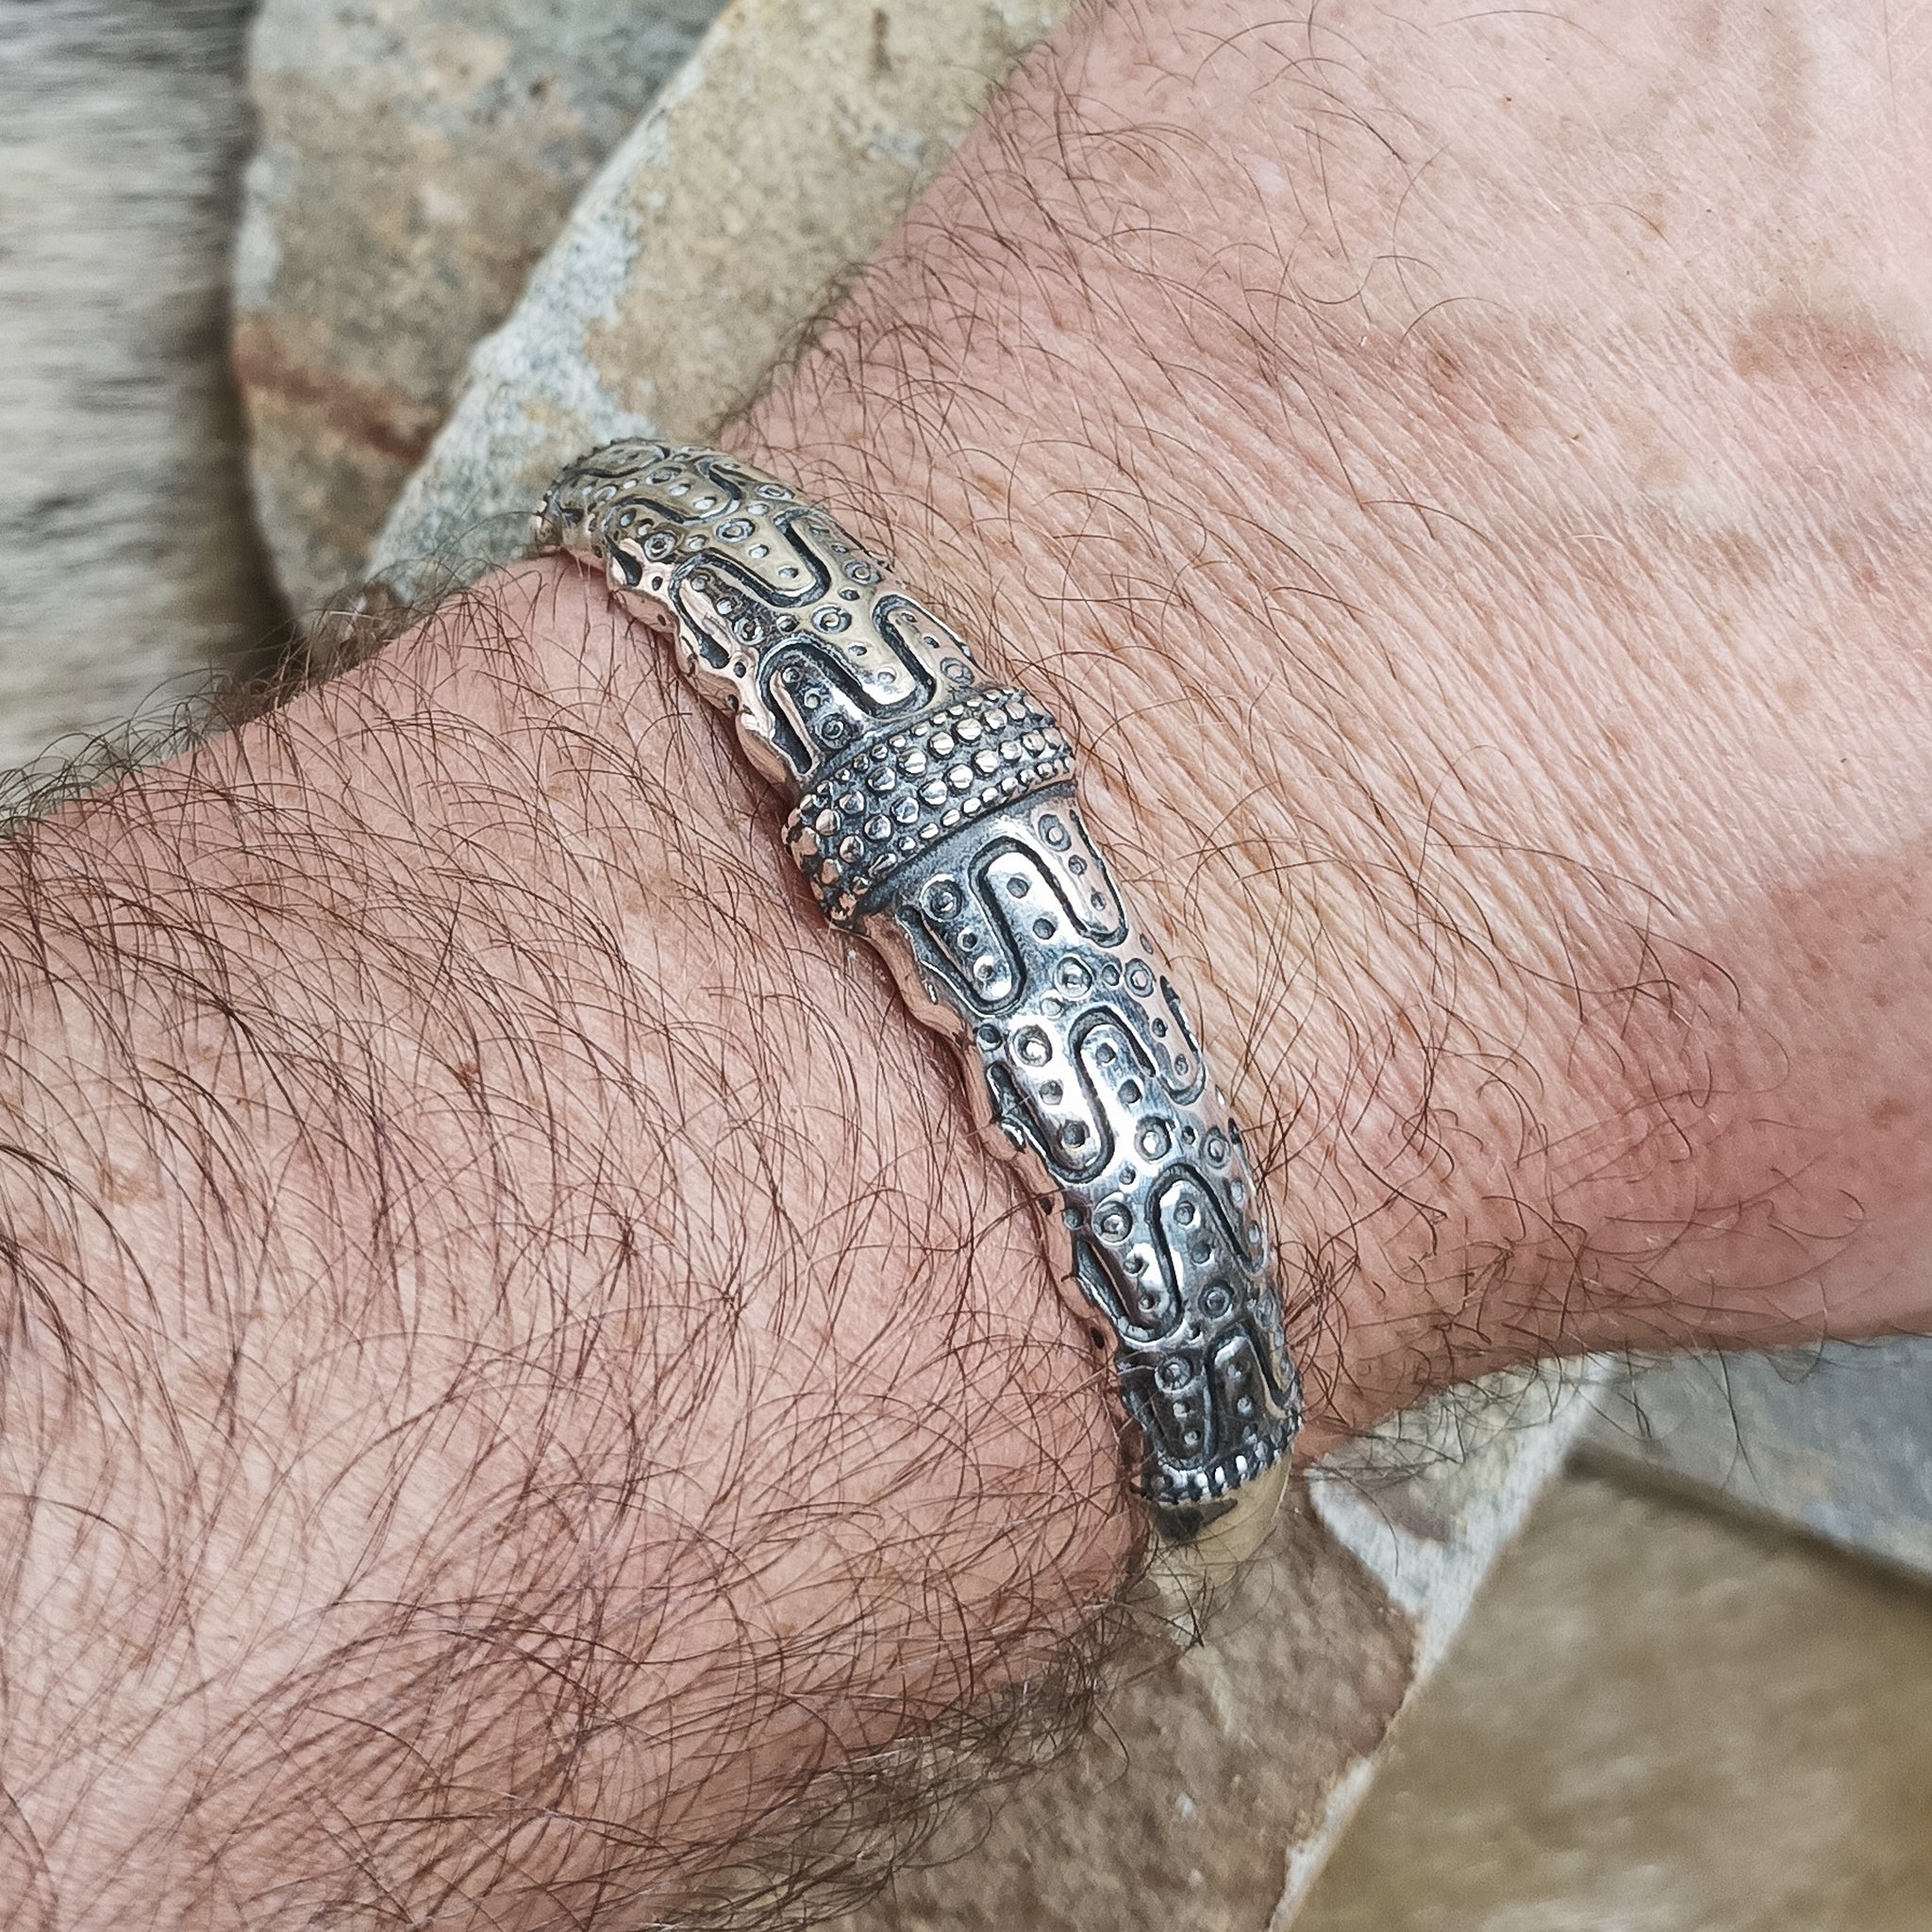 Silver Viking Bracelet from Falster on Wrist 